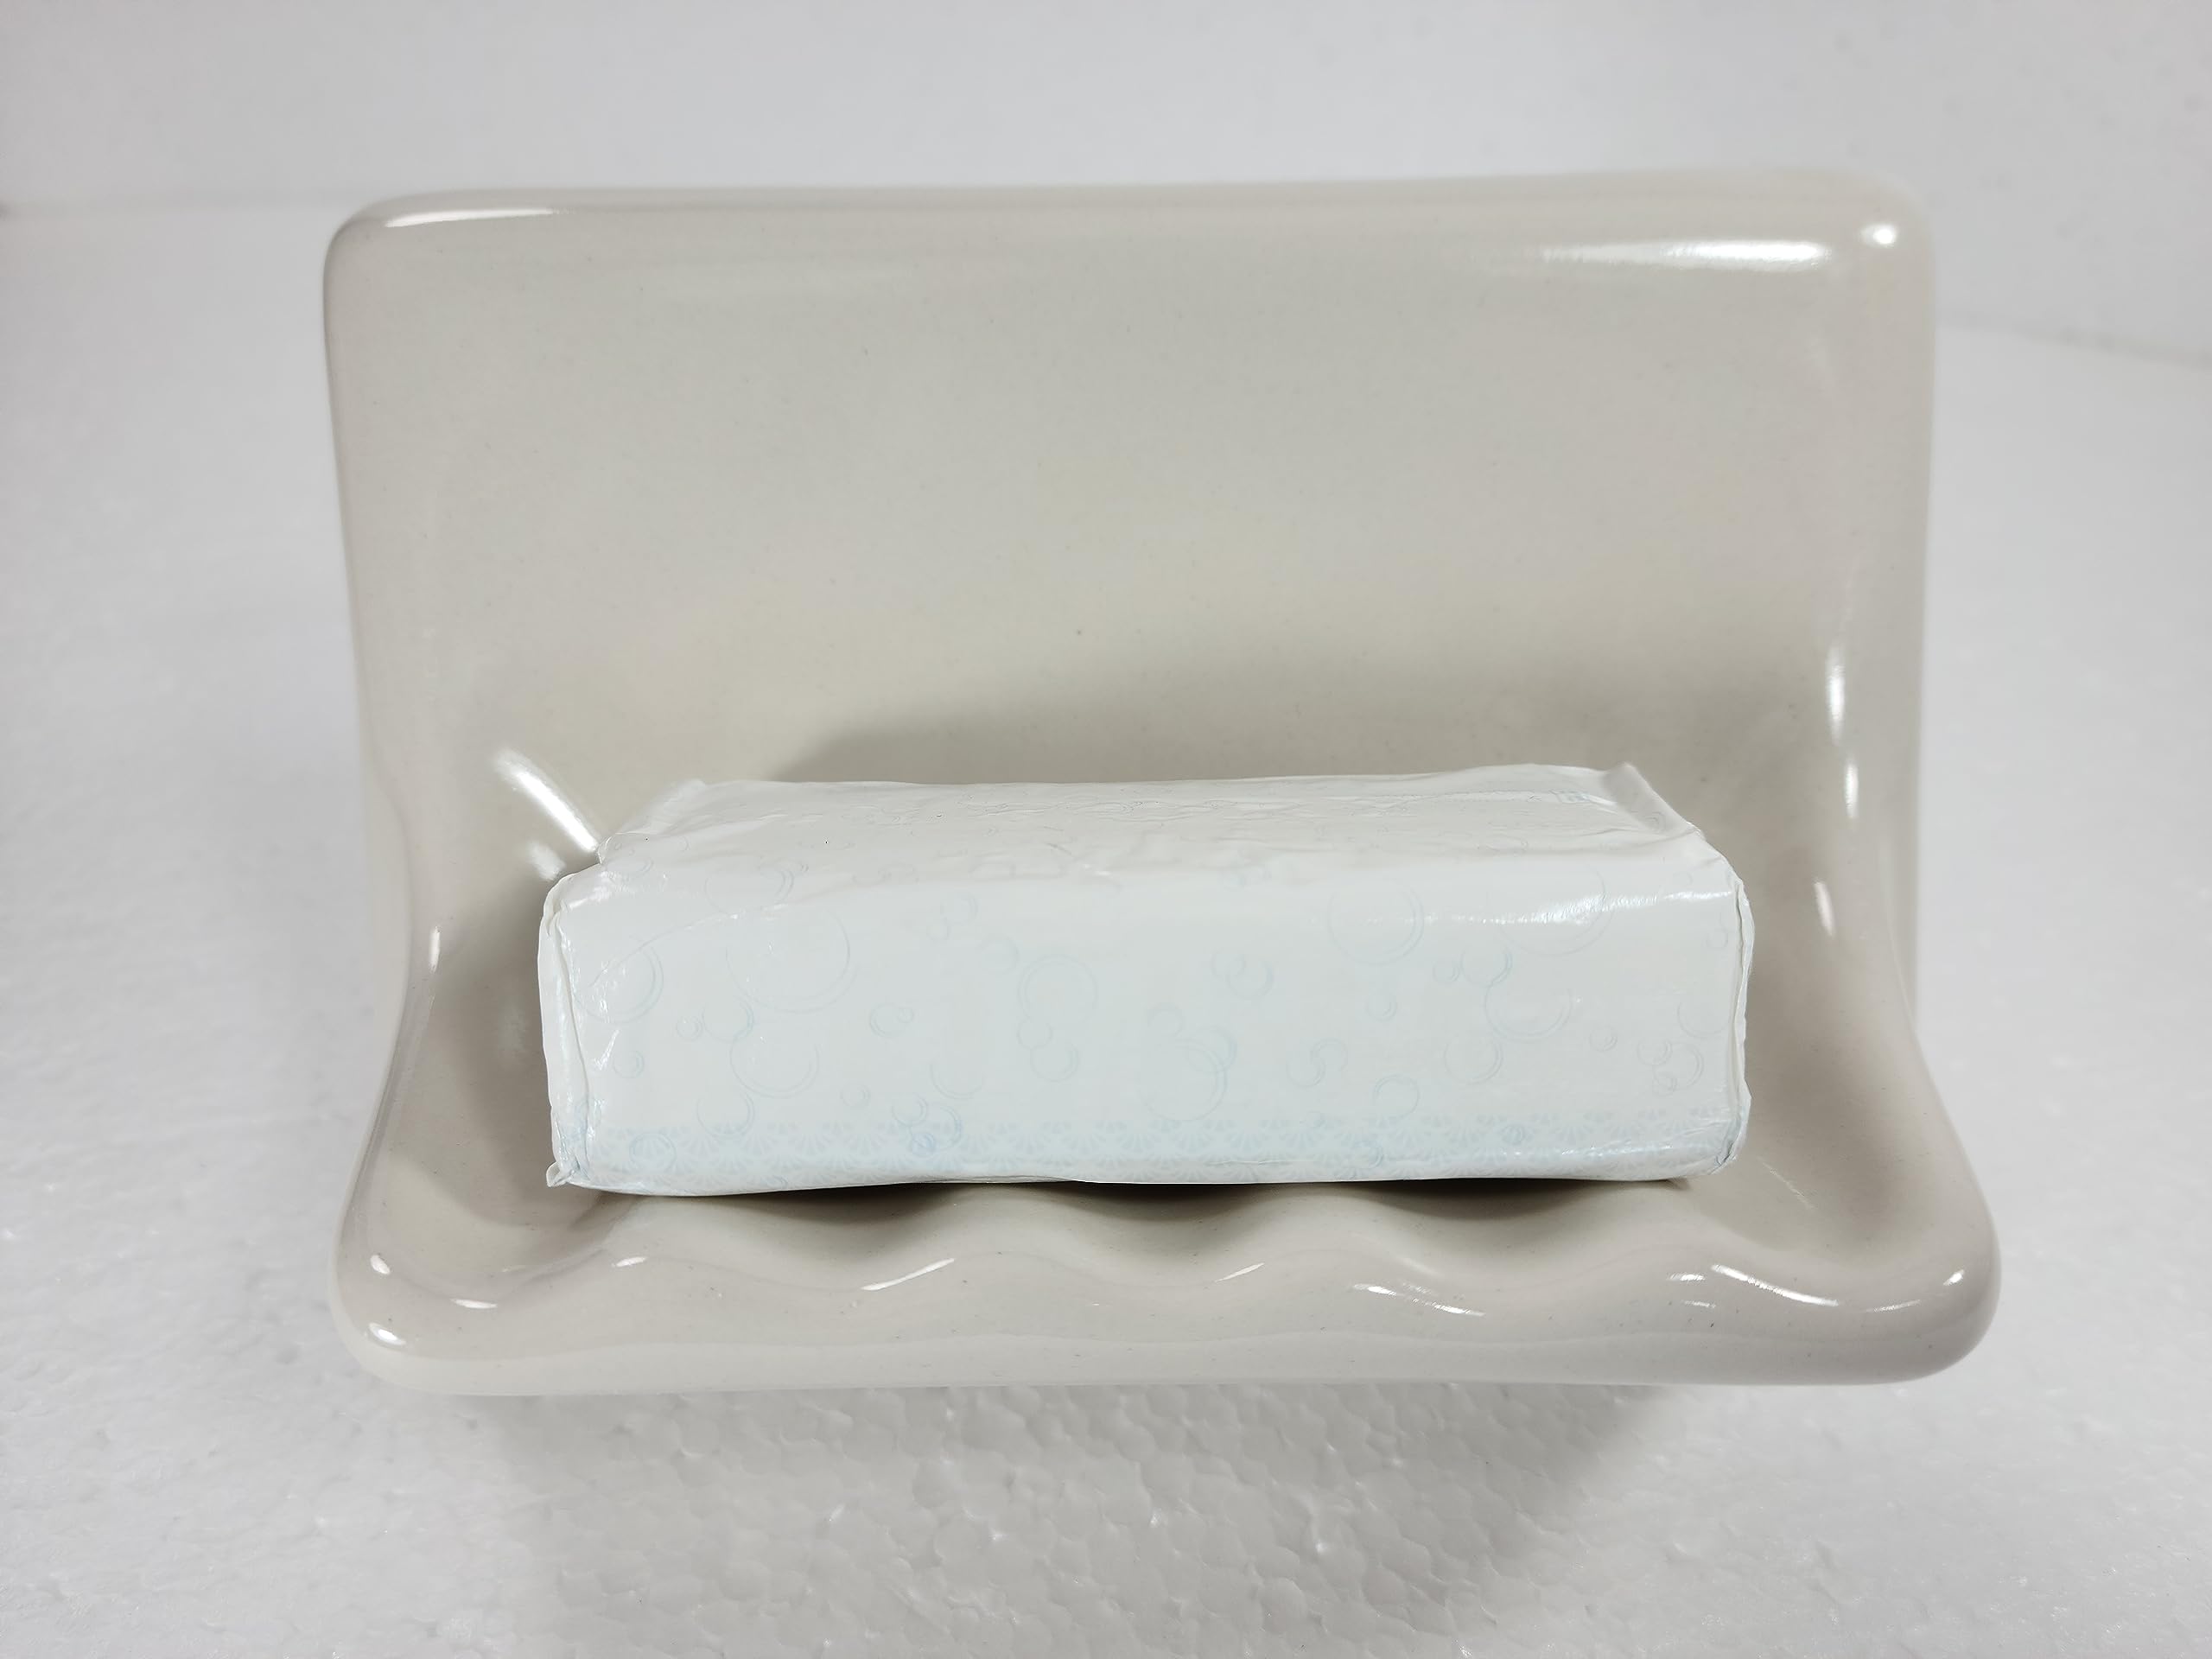 Beige Bone Almond Ceramic Soap Dish Shower Tray Tile in Installation Vintage Mid Century Modern Retro